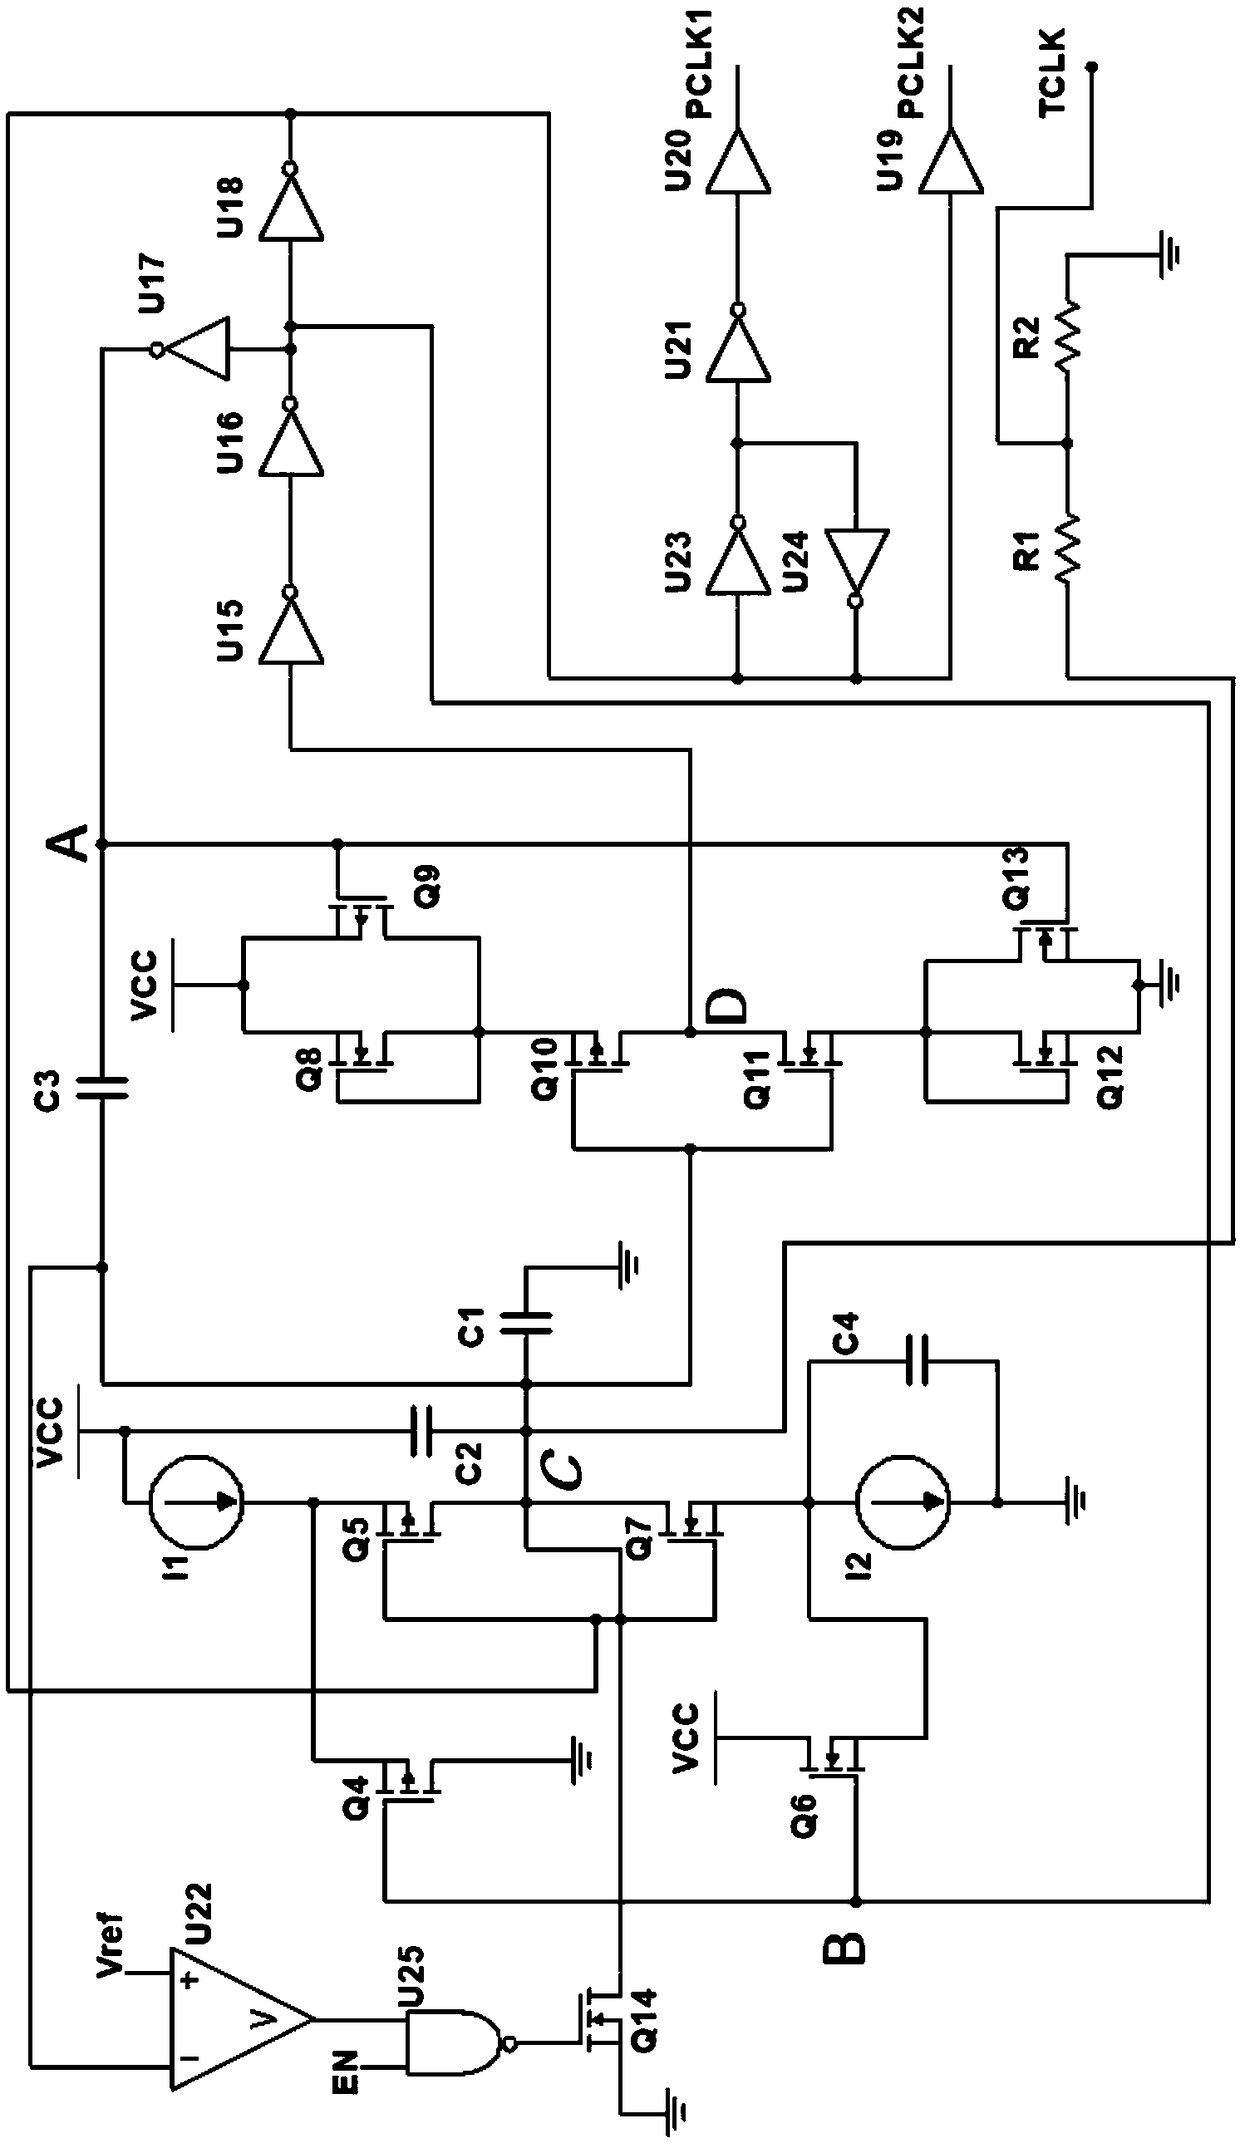 Digital power supply circuit based on MEMS sensor